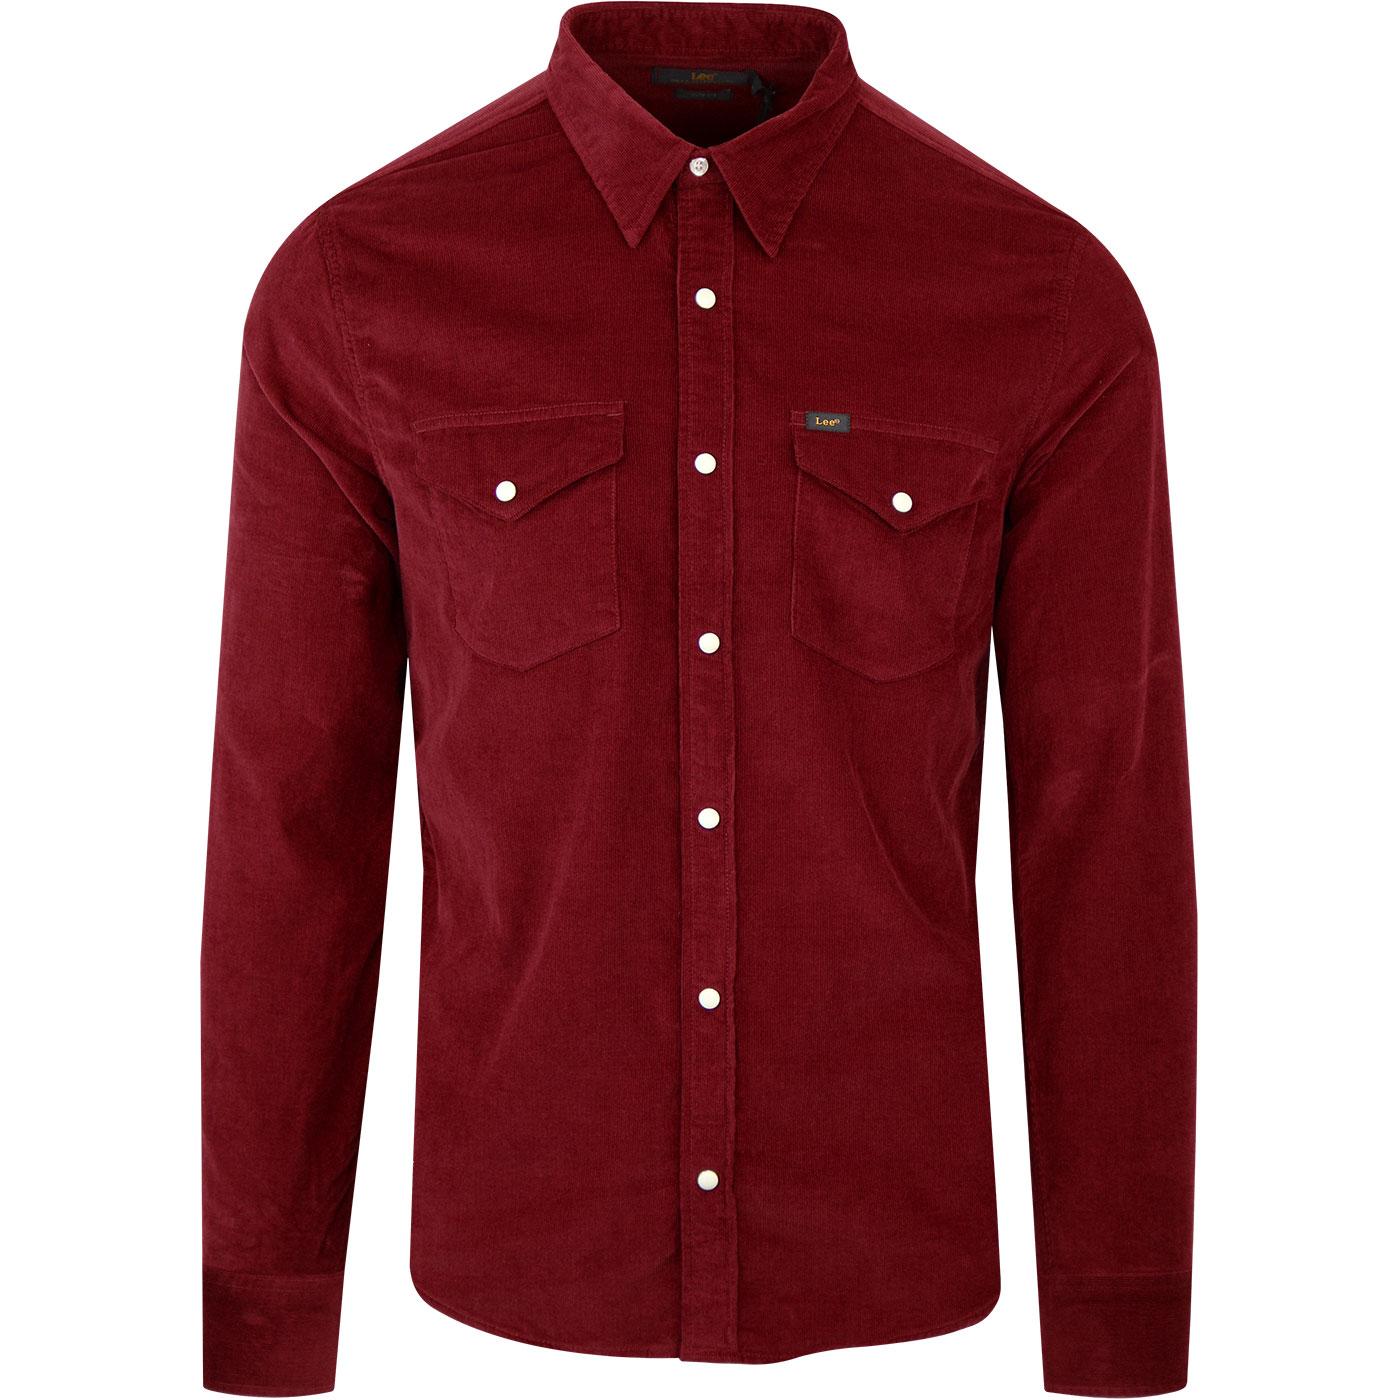 LEE Retro 70s Corduroy Western Shirt (Rhubarb Red)